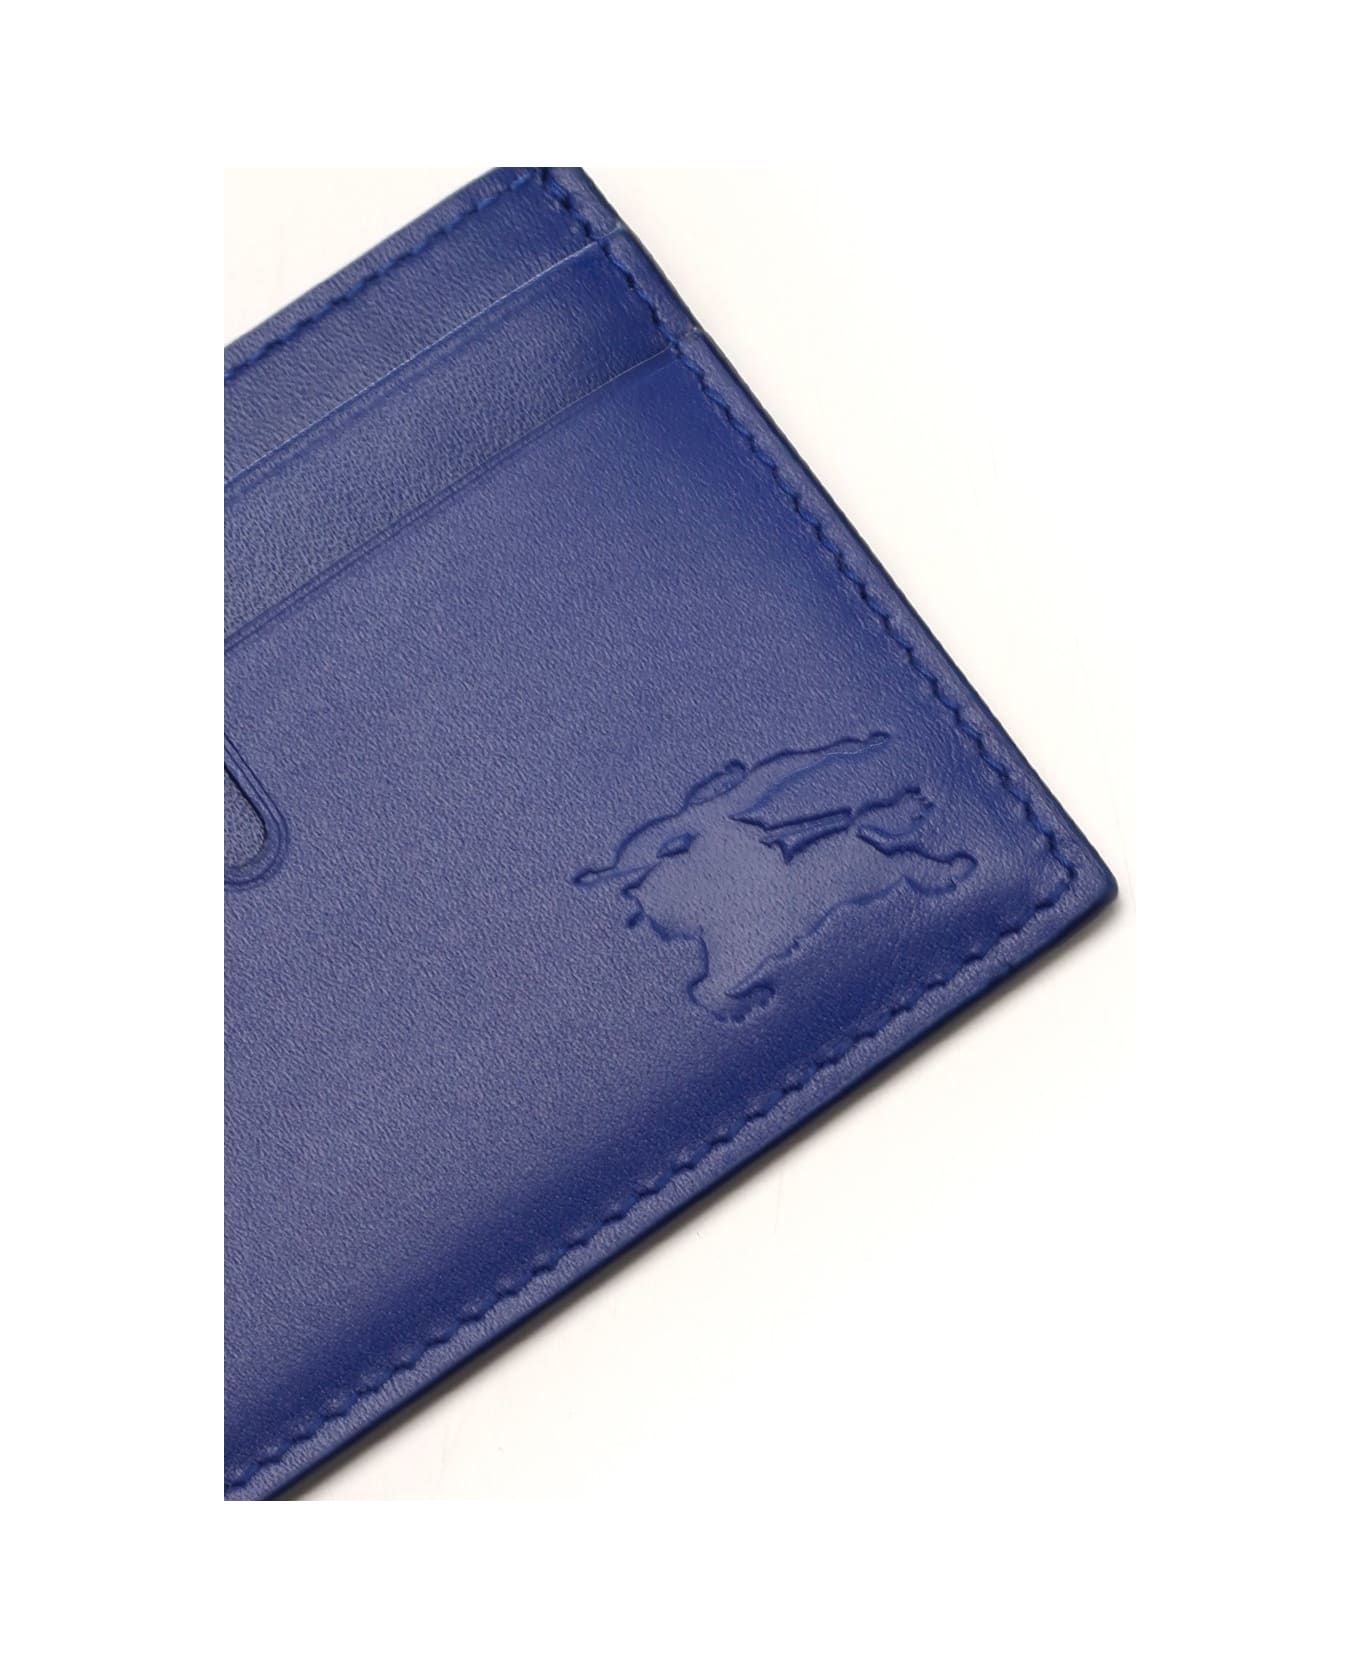 Burberry 5 Slots Card Case - Blue 財布